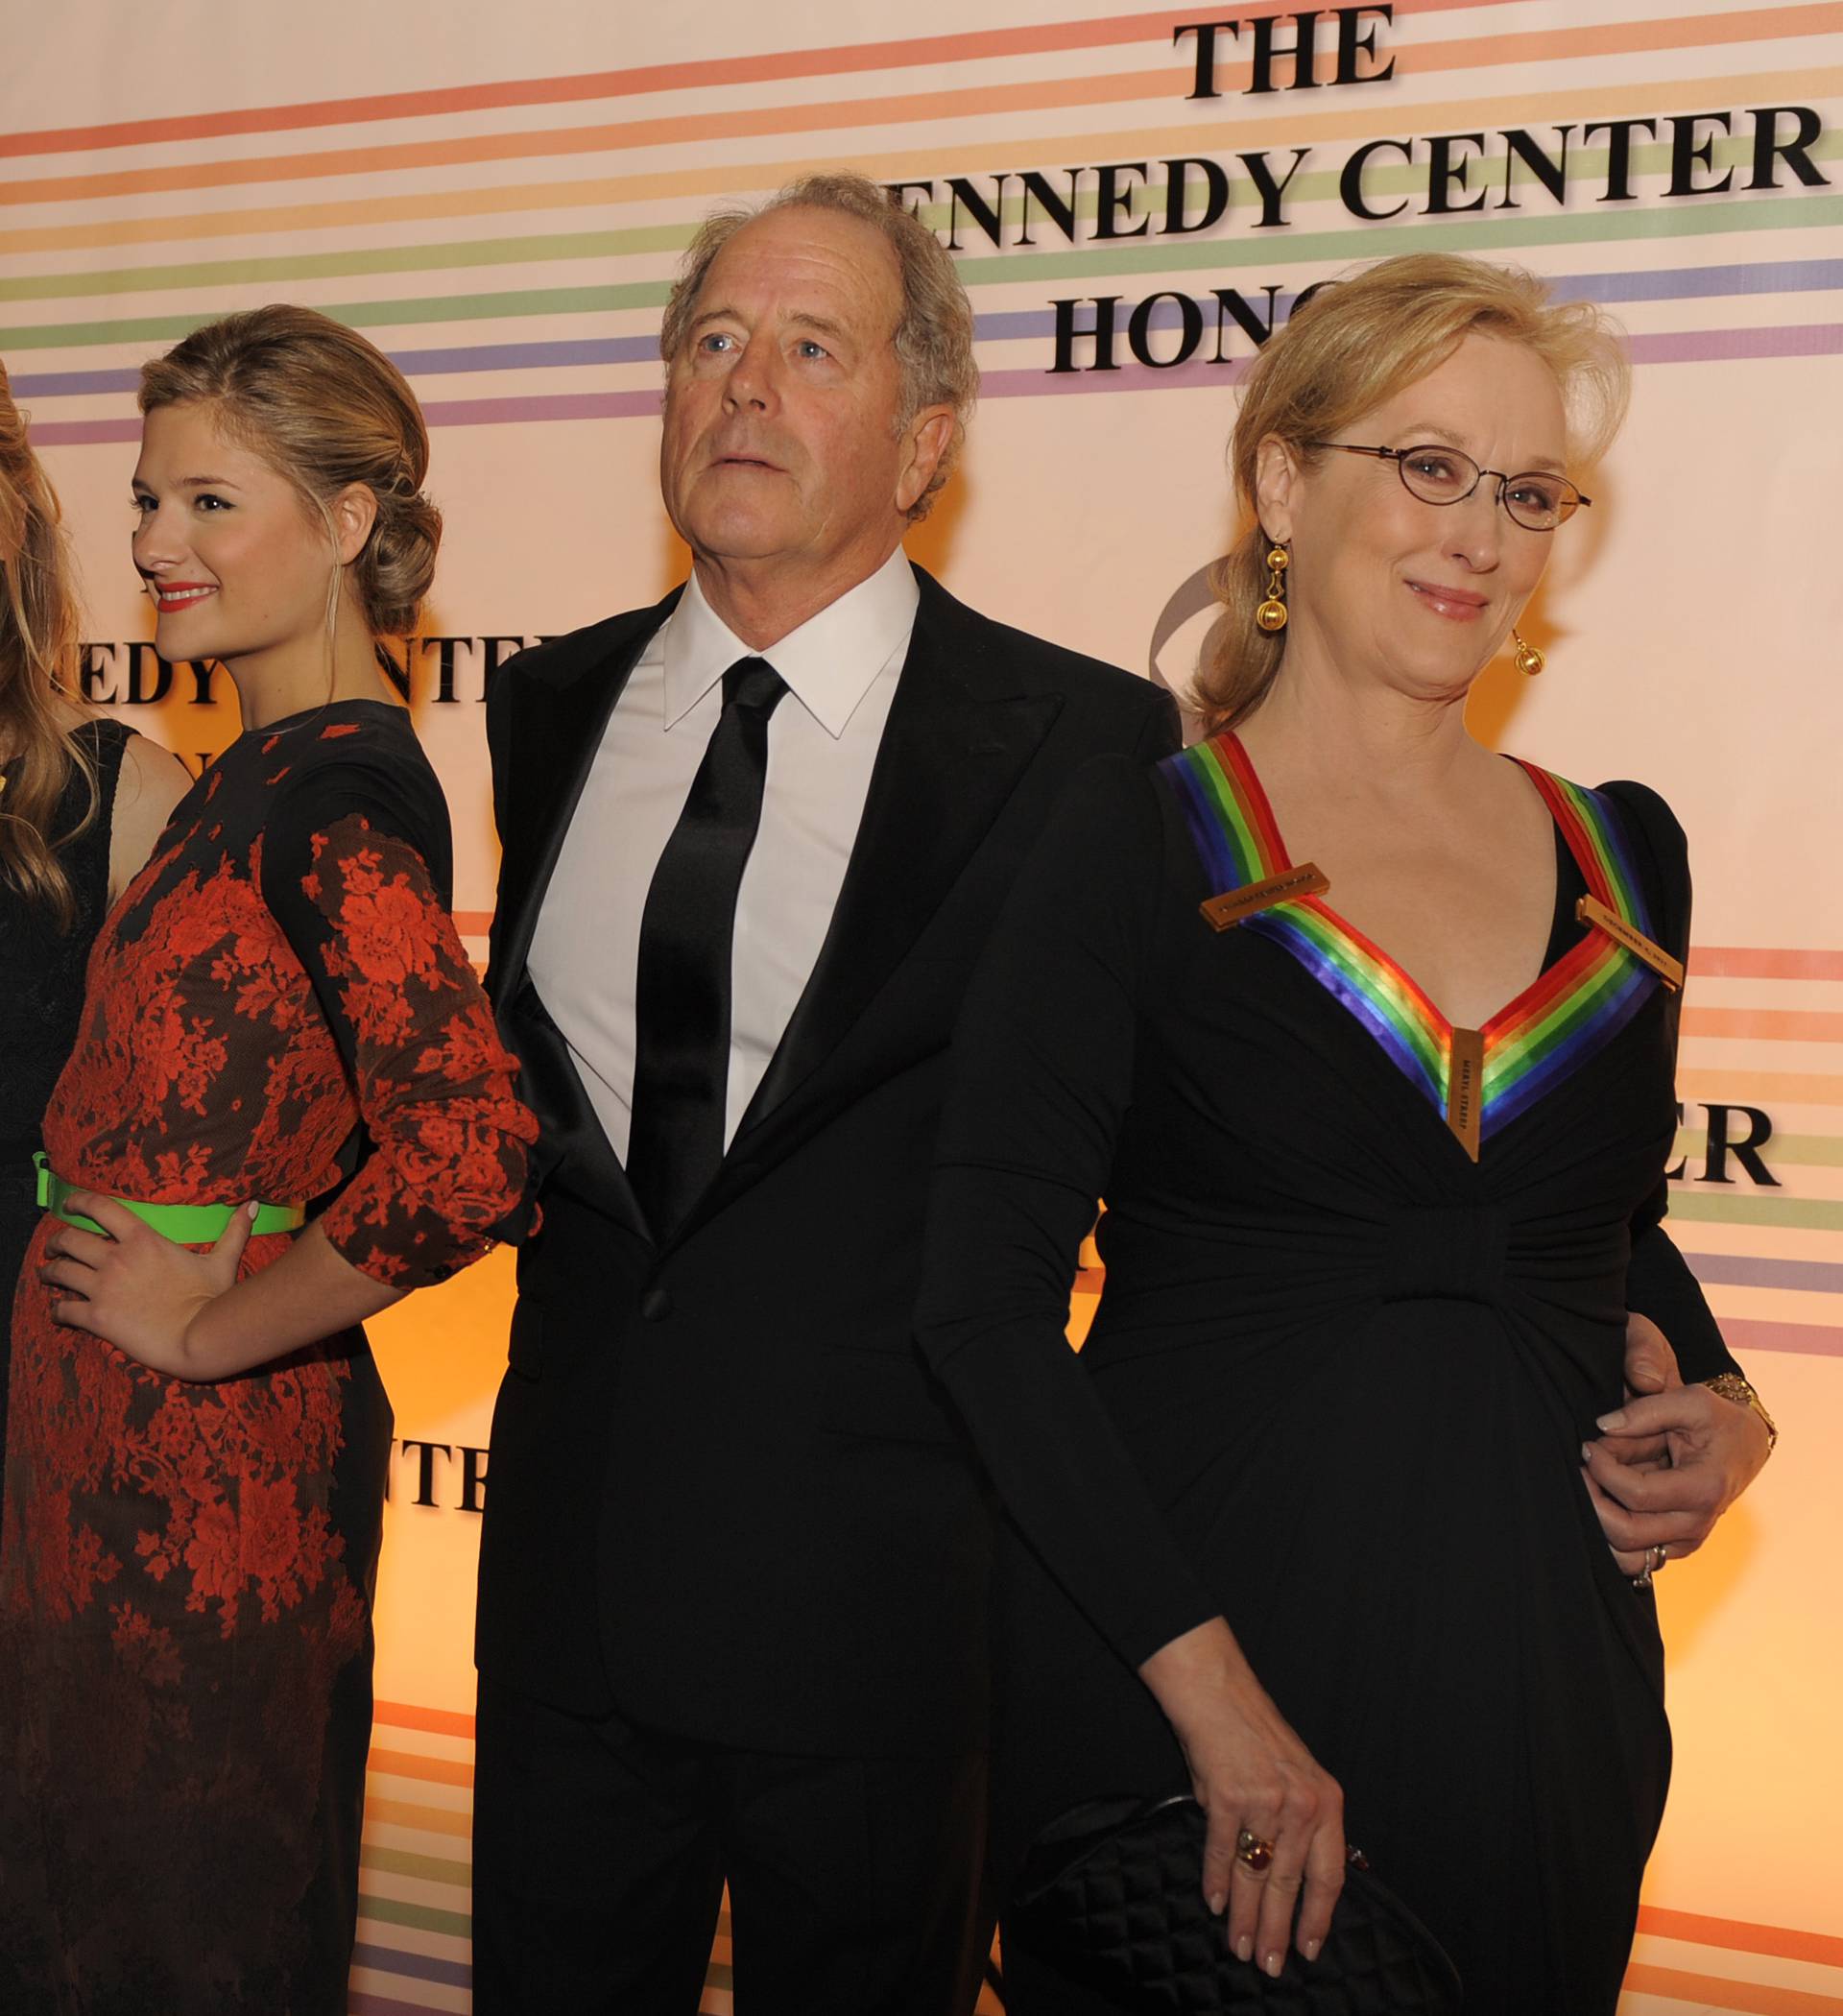 2011 Kennedy Center Honoree Meryl Streep arrives for gala evening in Washington DC